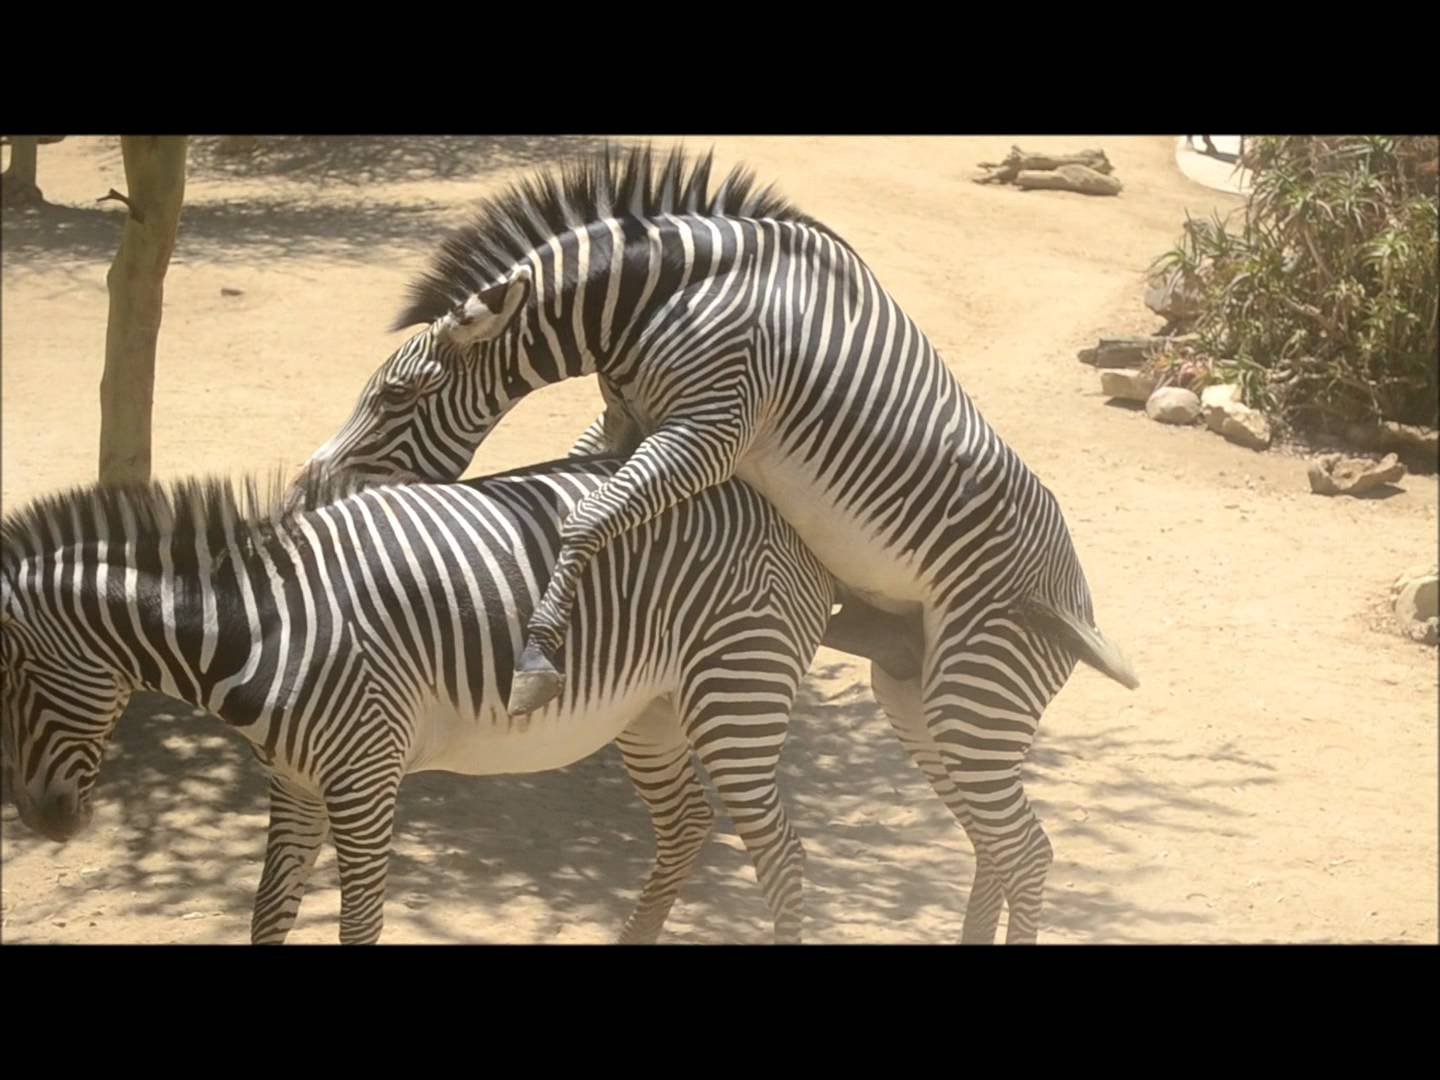 Zibr Sex - zebra Archives - Animal Video WorldAnimal Video World